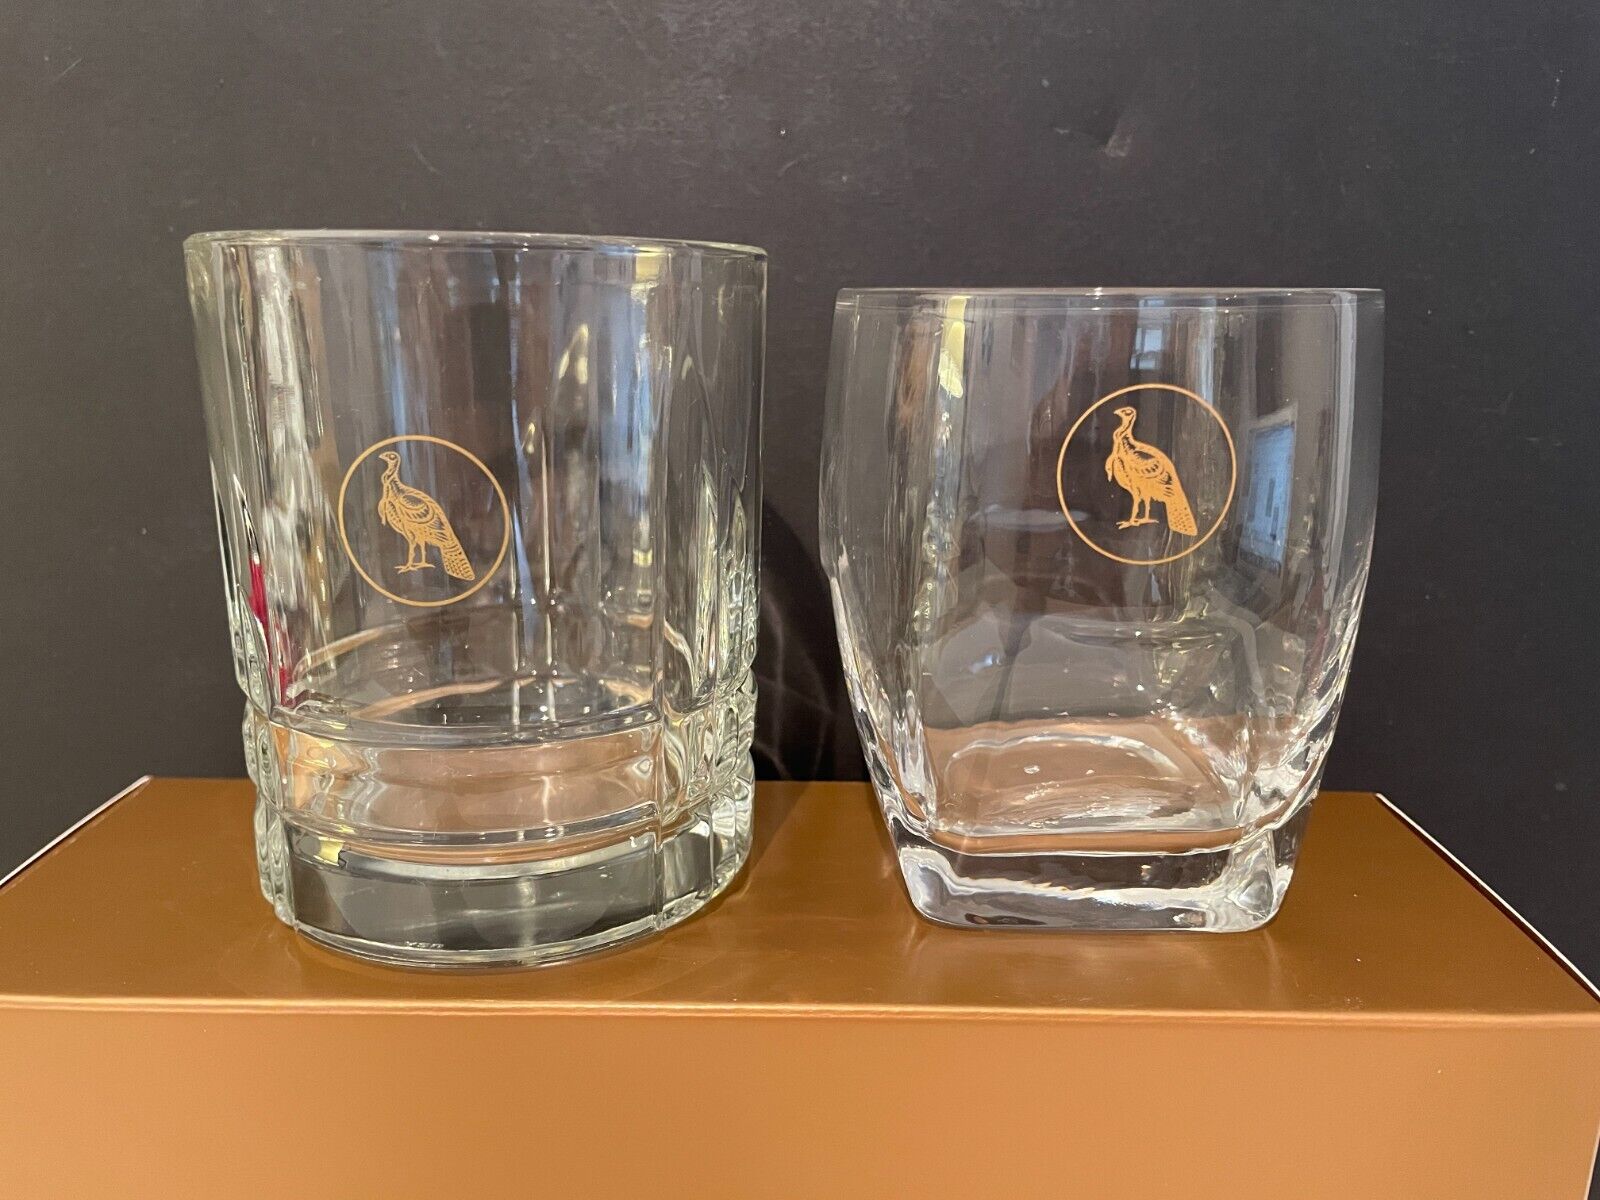 Two Wild Turkey Bourbon Whiskey Gold Emblem Rocks Glasses - 2 Different Styles